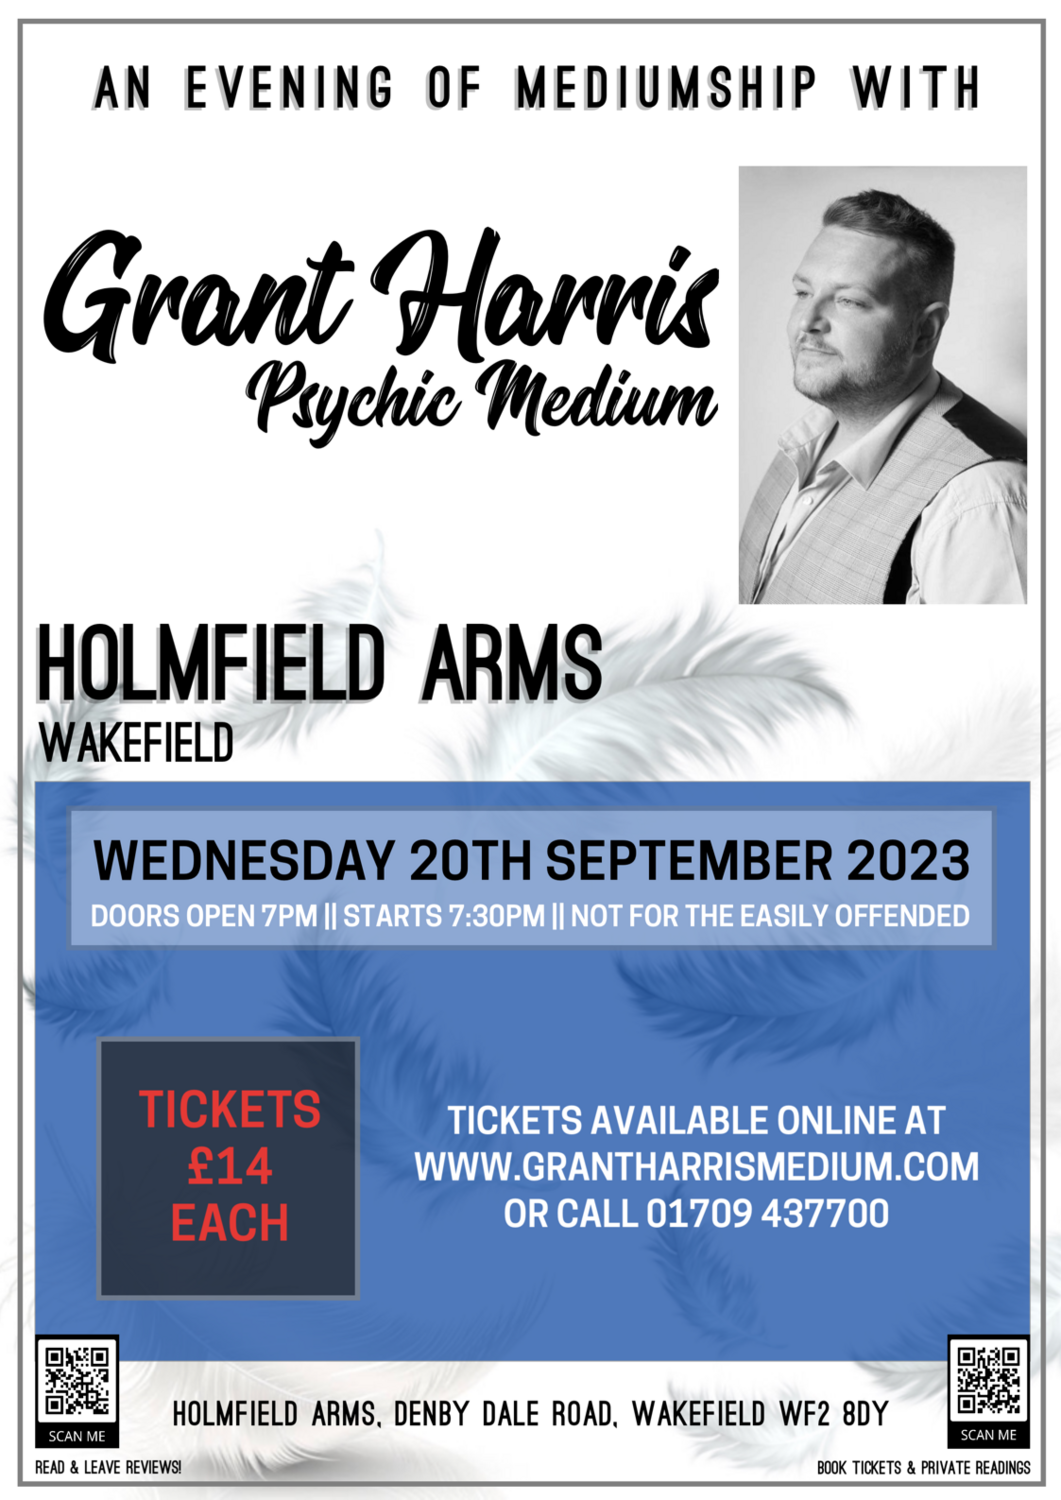 Holmfield Arms, Wakefield, Wednesday 20th September 2023